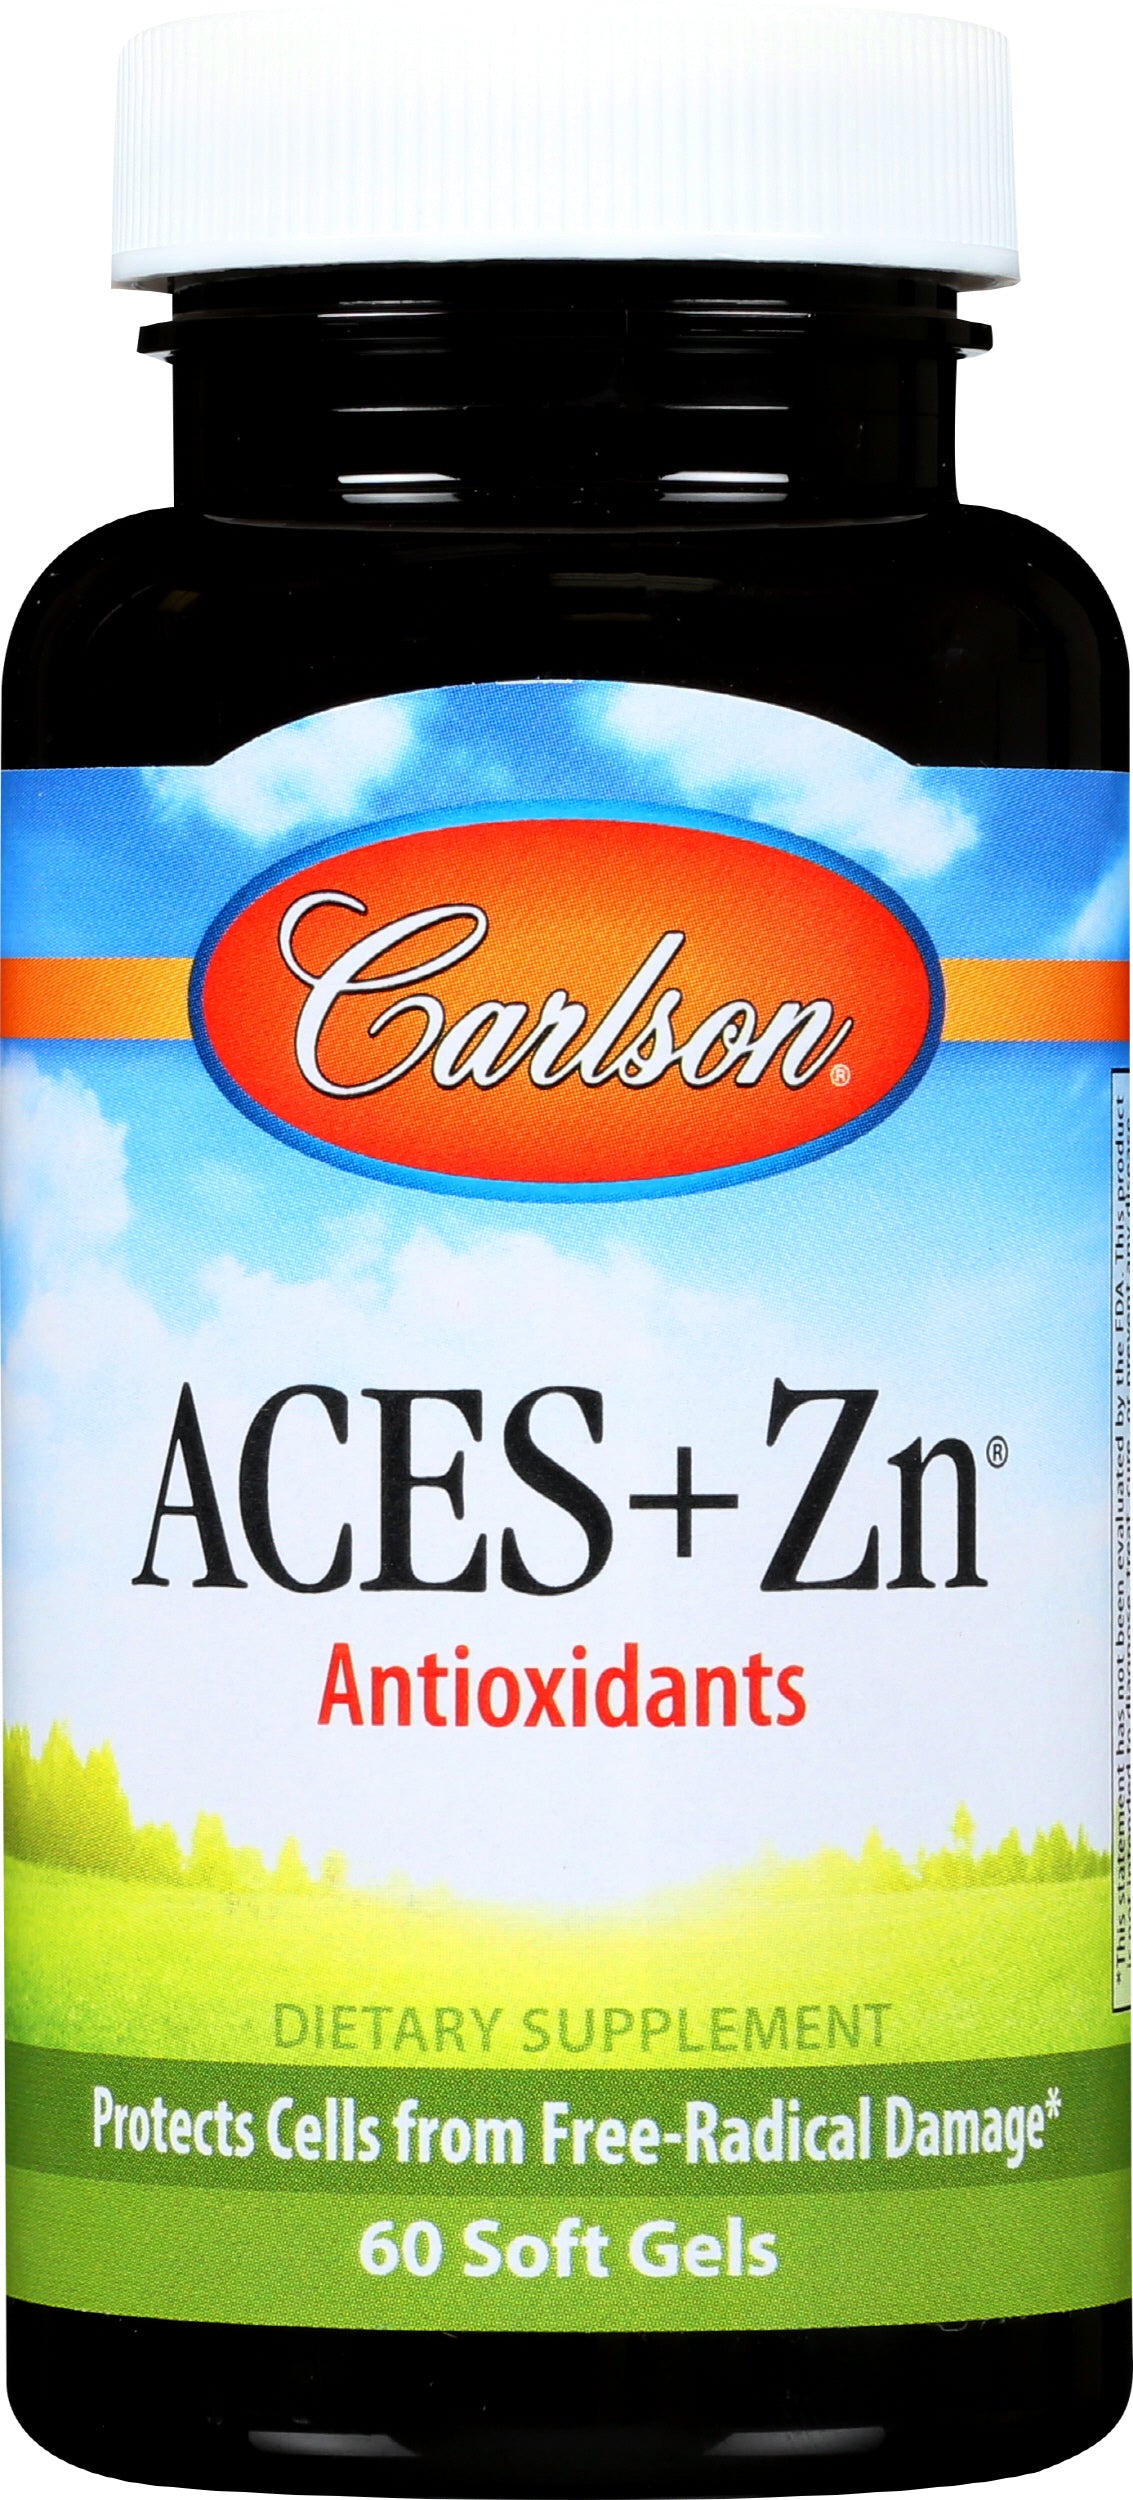 Carlson ACES+Zn Vitamins A, C, E + Selenium & Zinc 60 Soft Gels Front of Bottle